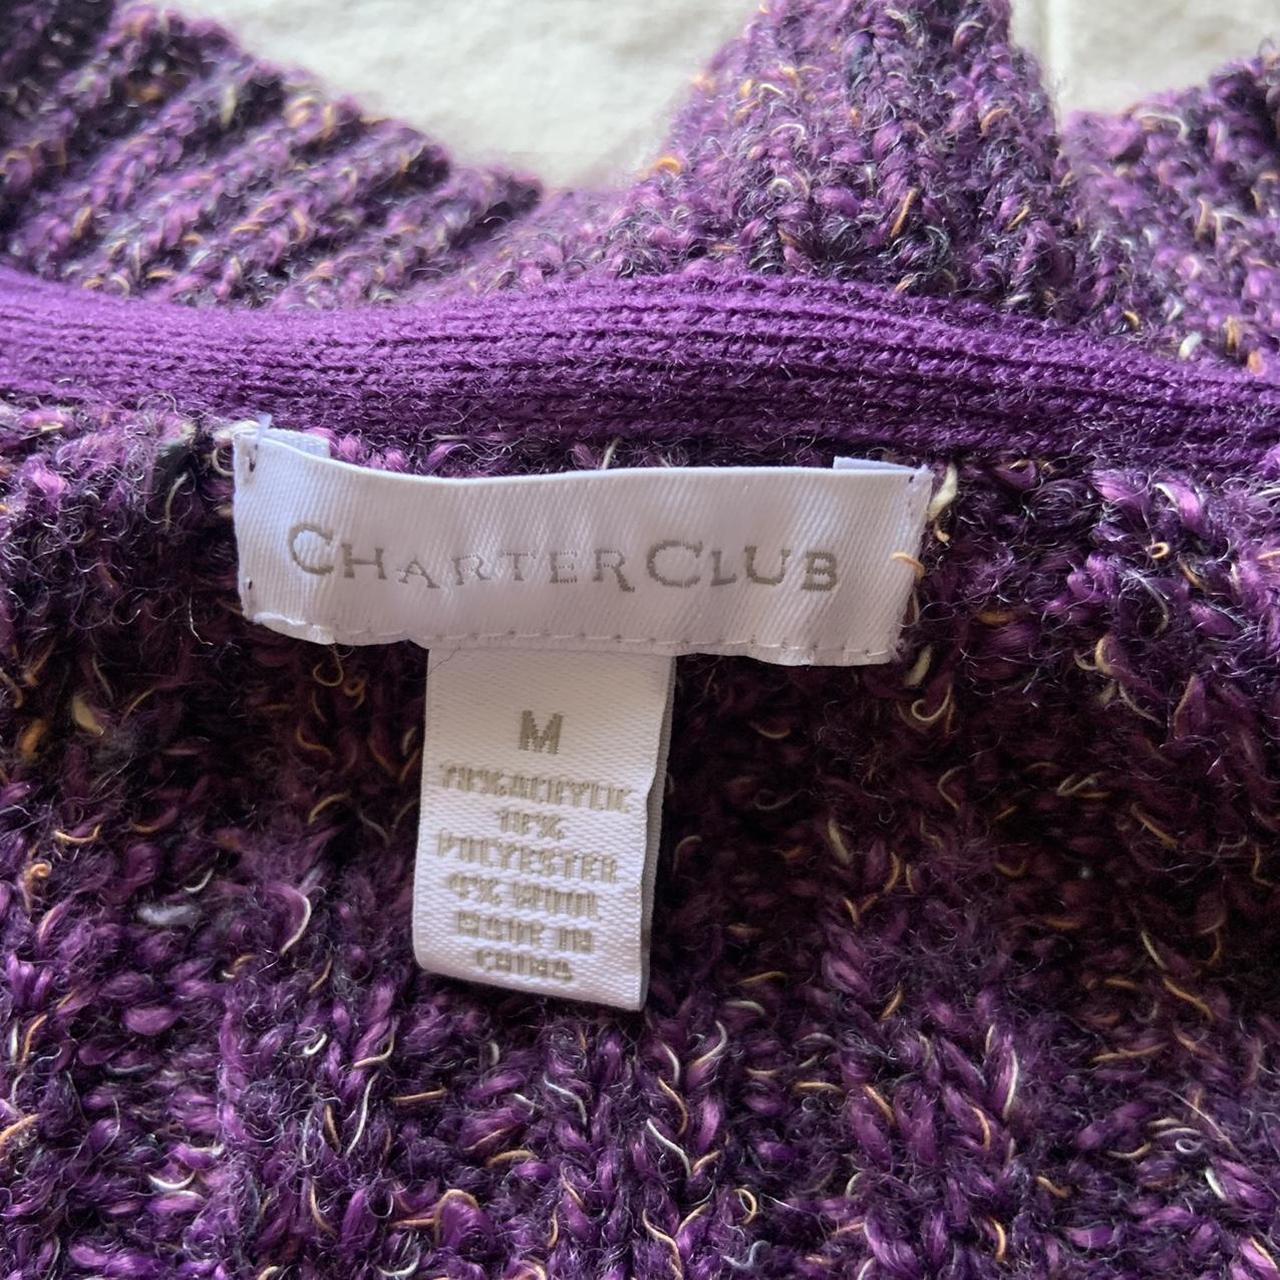 Product Image 4 - Vintage Purple Wool Cardigan

☆ A